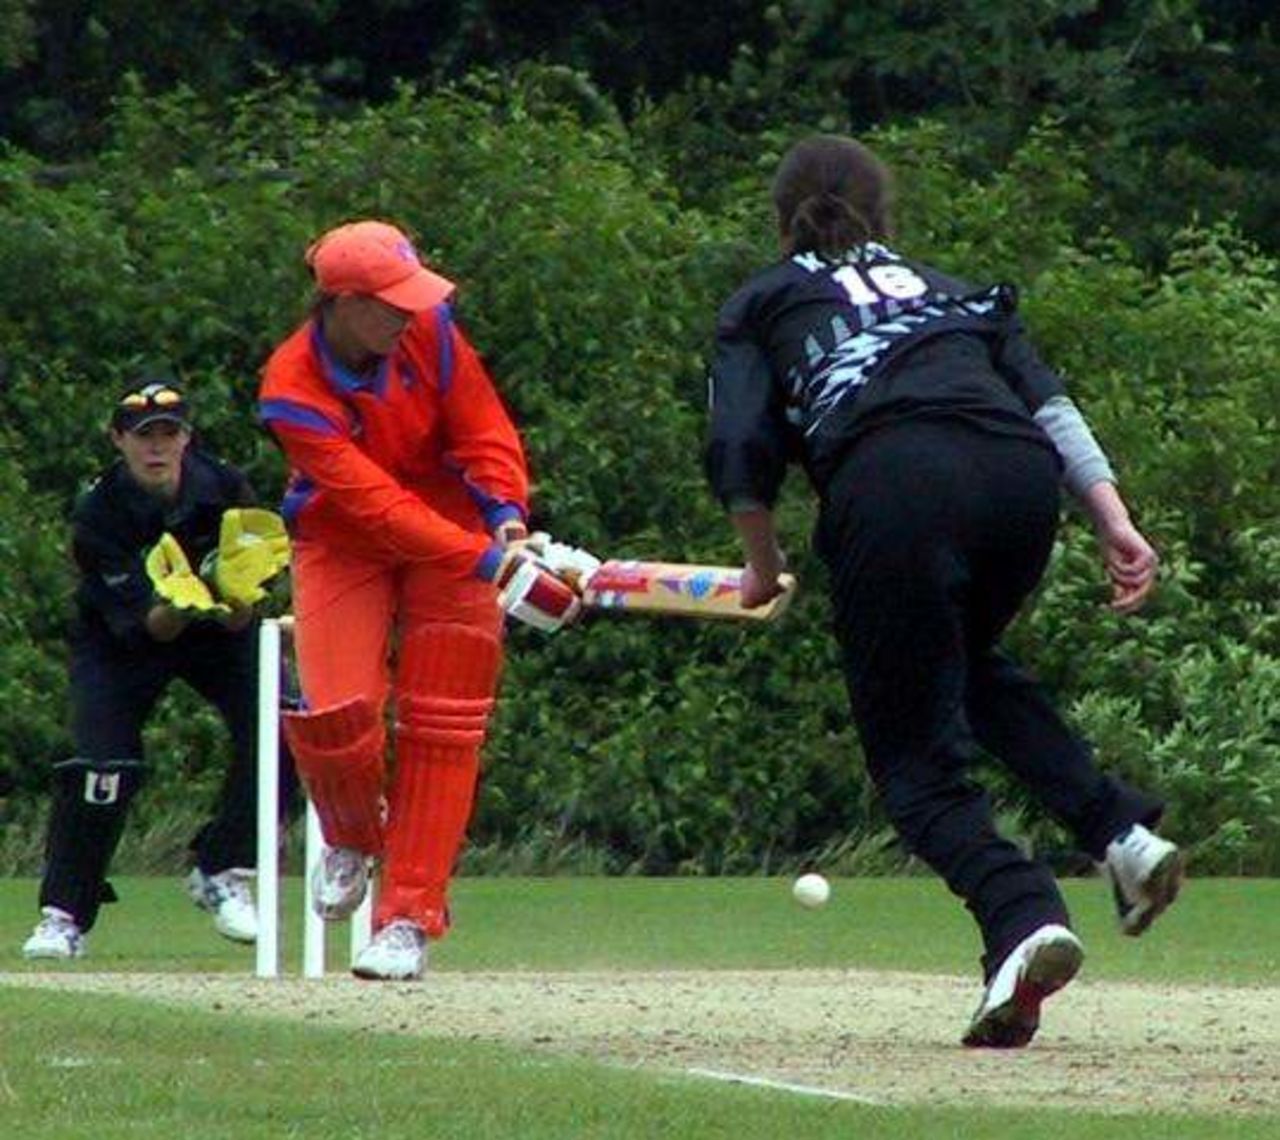 King bowling to Salomons, Netherlands Women v New Zealand Women, 28 June 2002